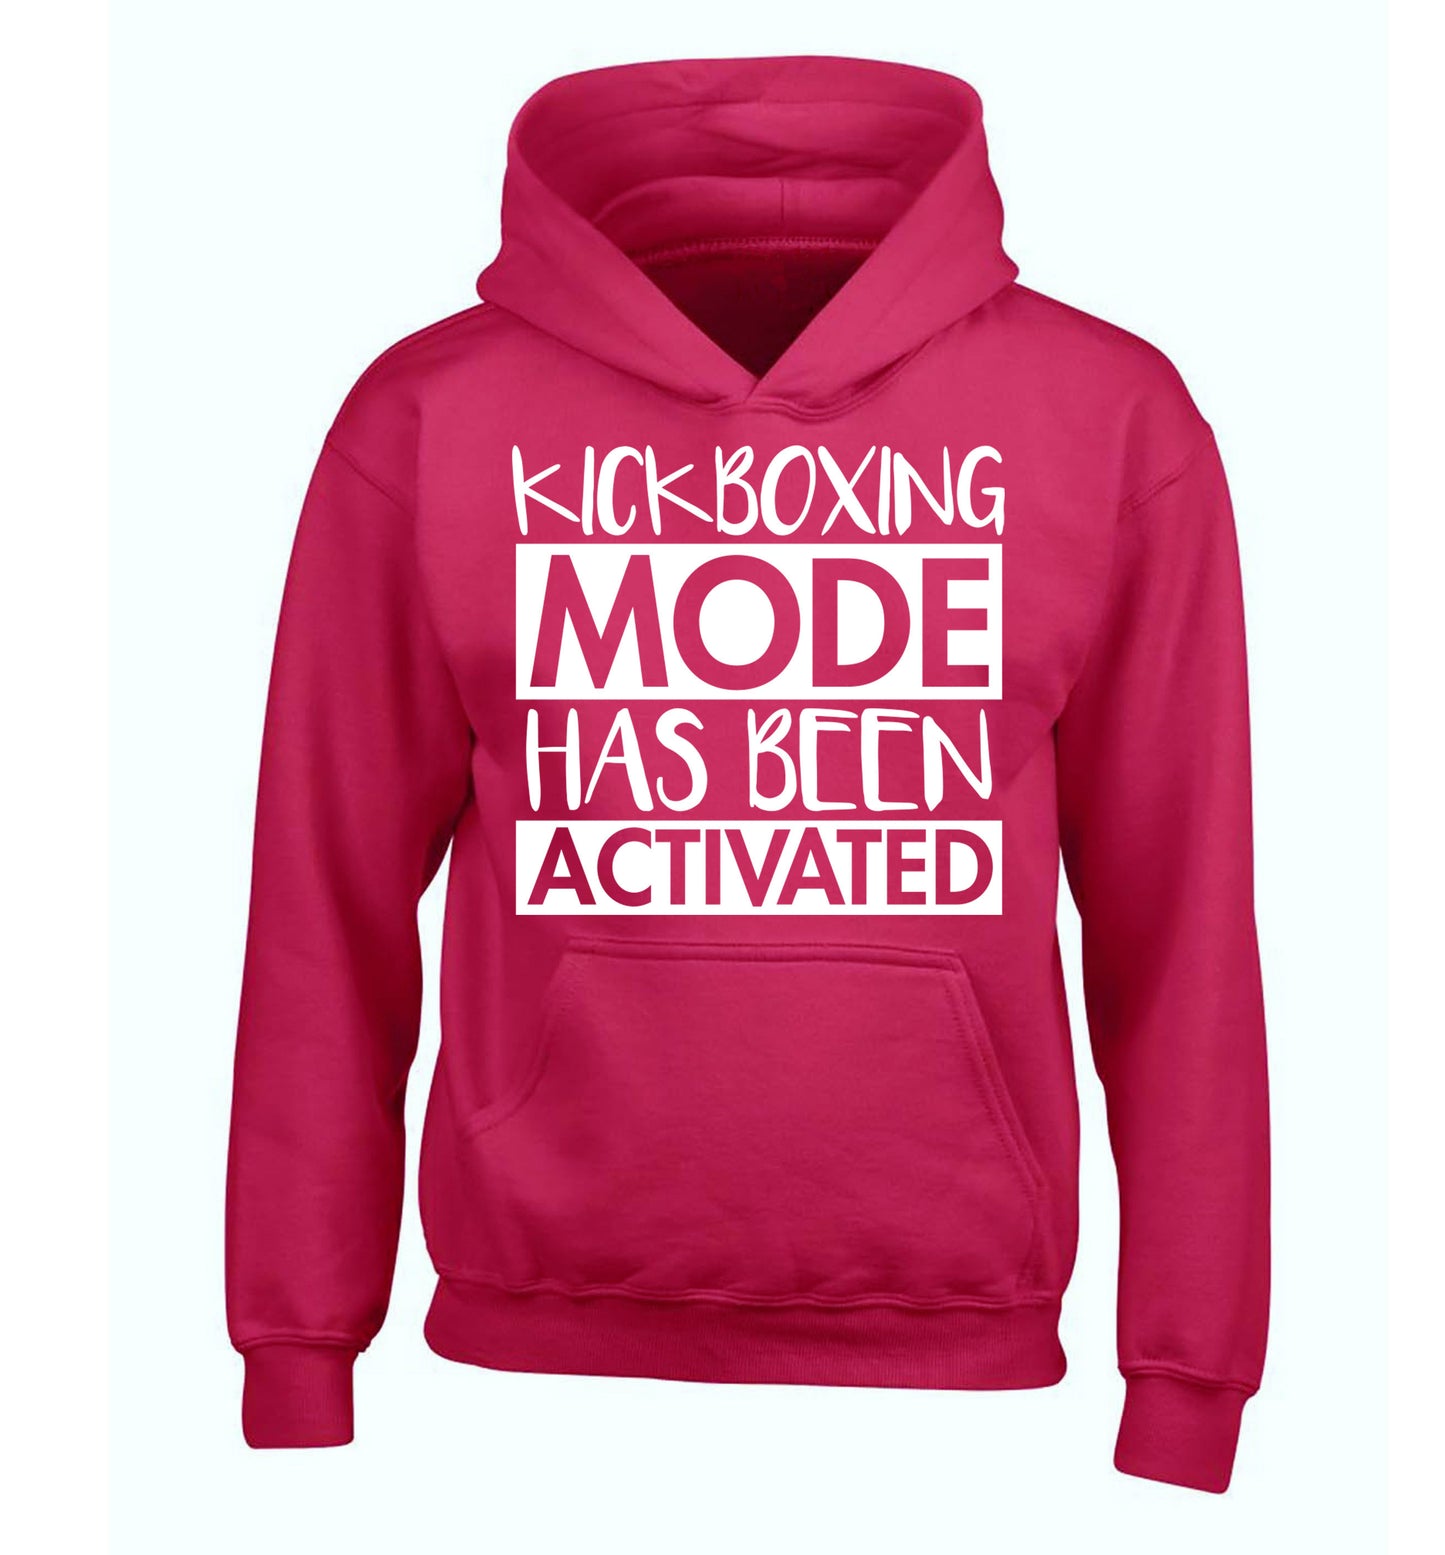 Kickboxing mode activated children's pink hoodie 12-14 Years